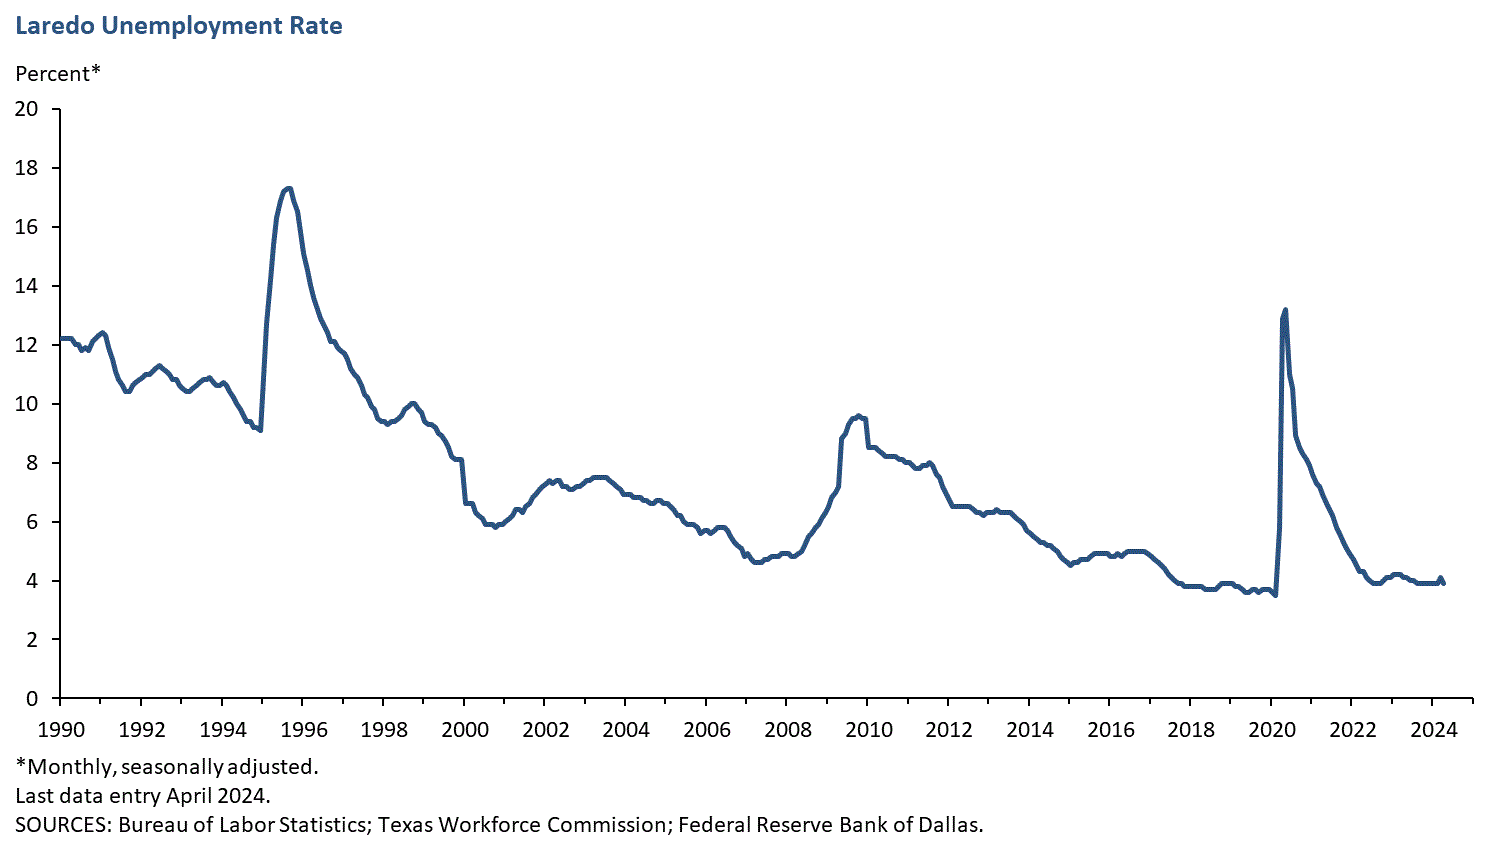 Laredo Unemployment Rate